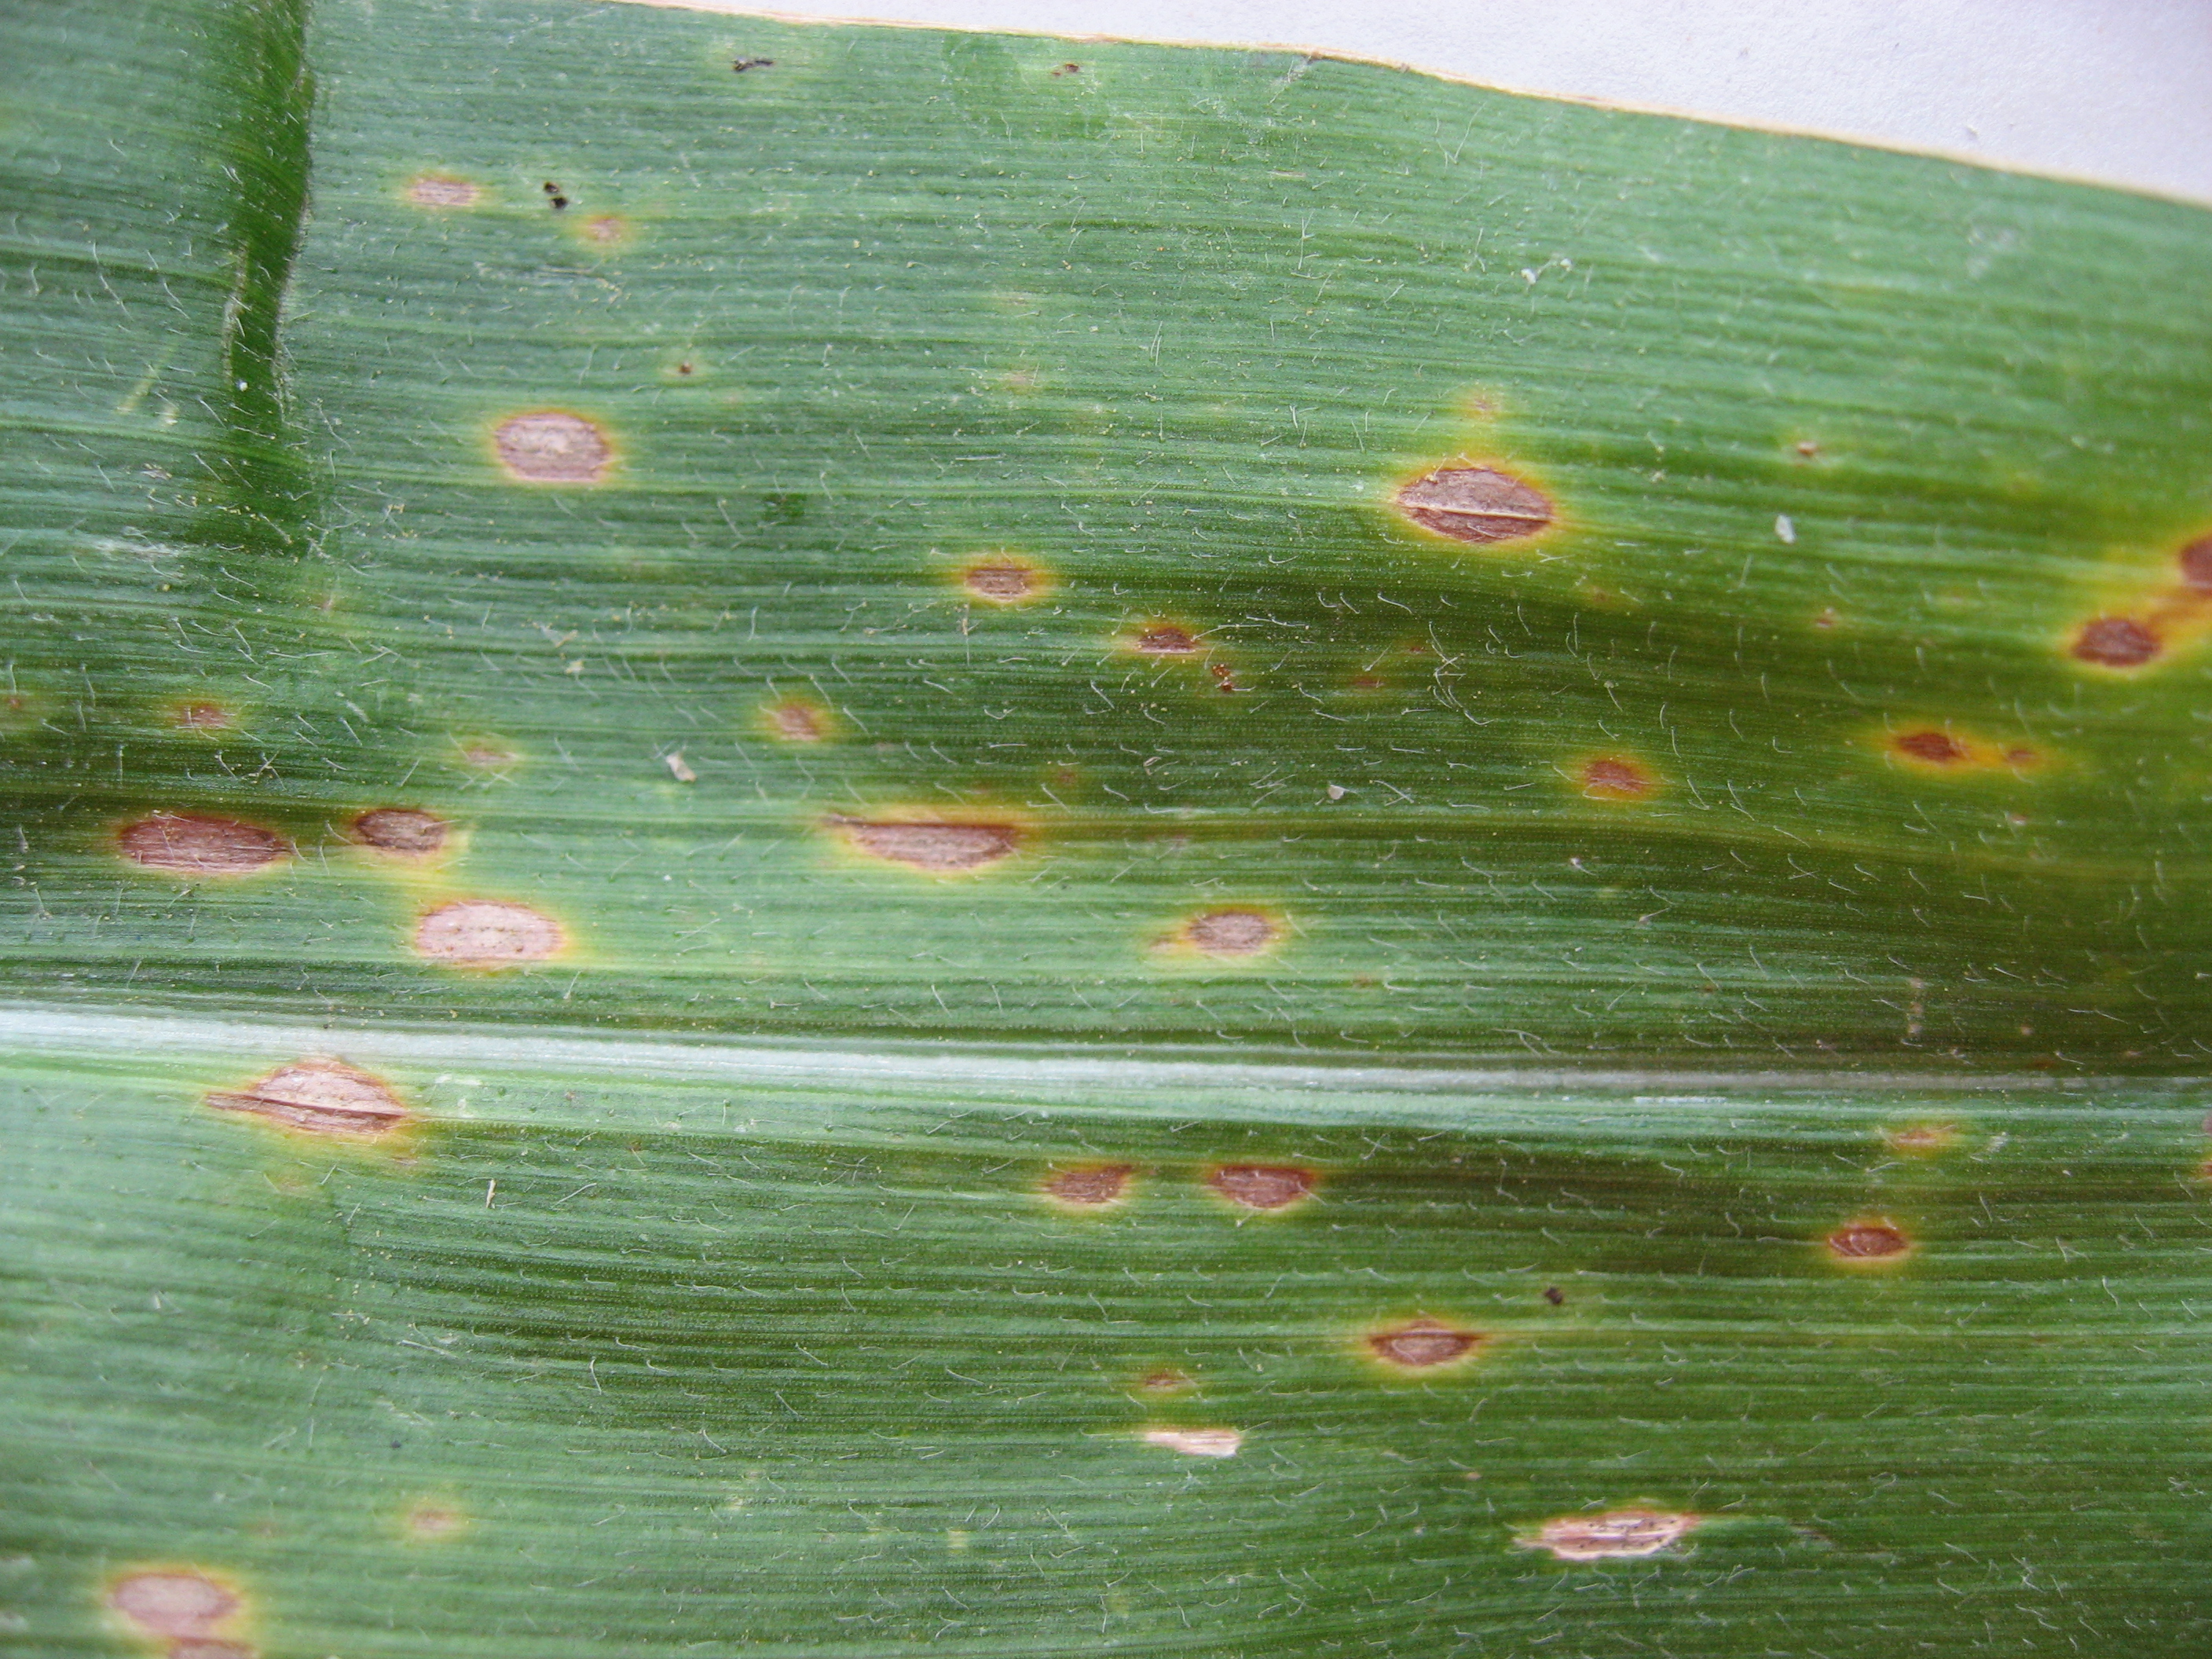 Northern corn leaf spot lesions. 